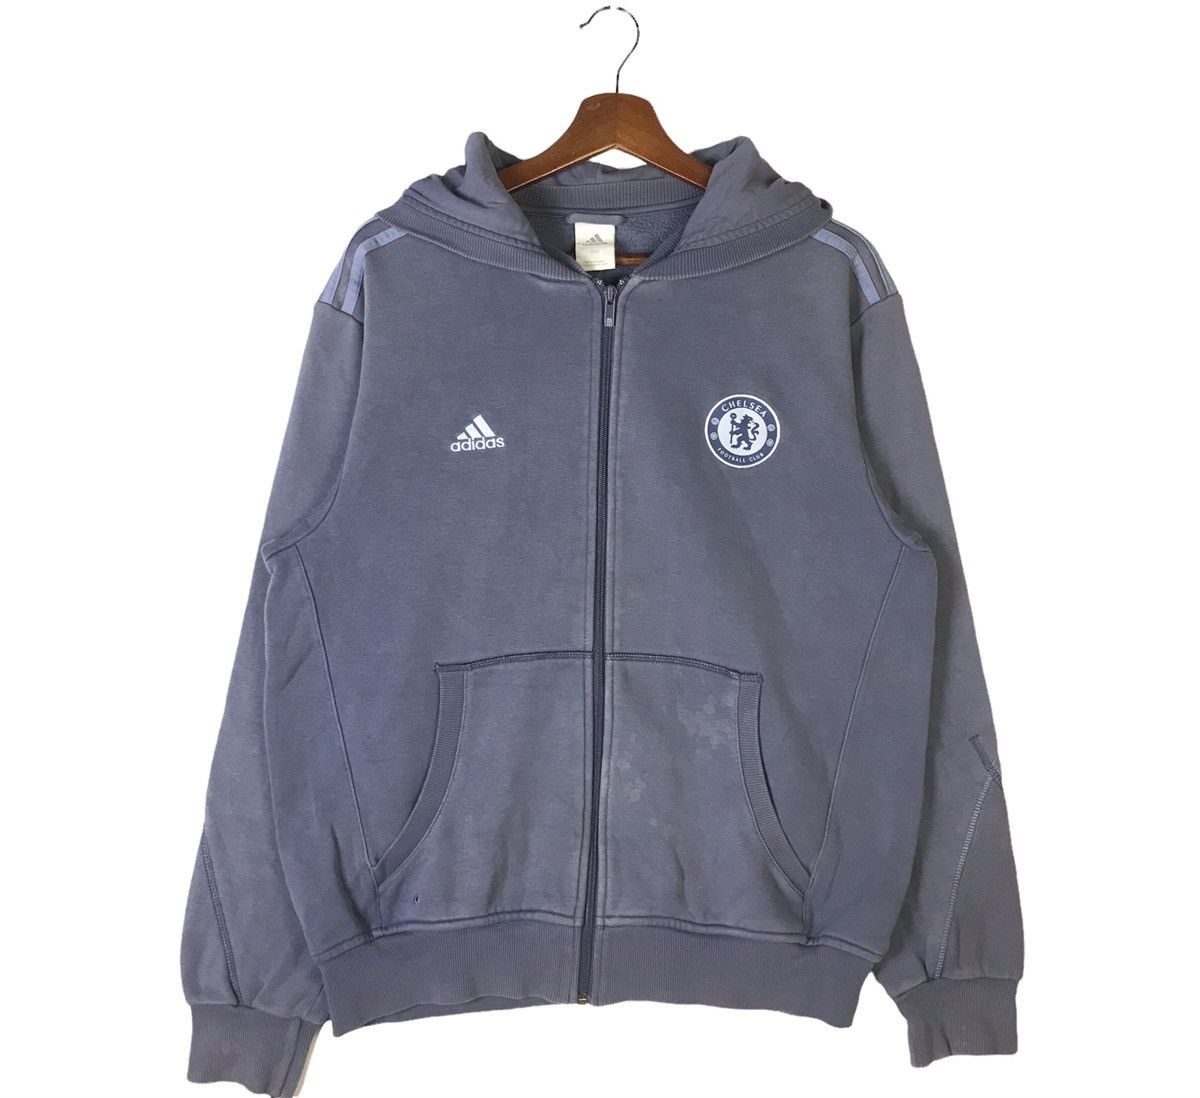 Adidas Adidas x Chelsea FC Zipper Hoodie Sweater Size US M / EU 48-50 / 2 - 1 Preview